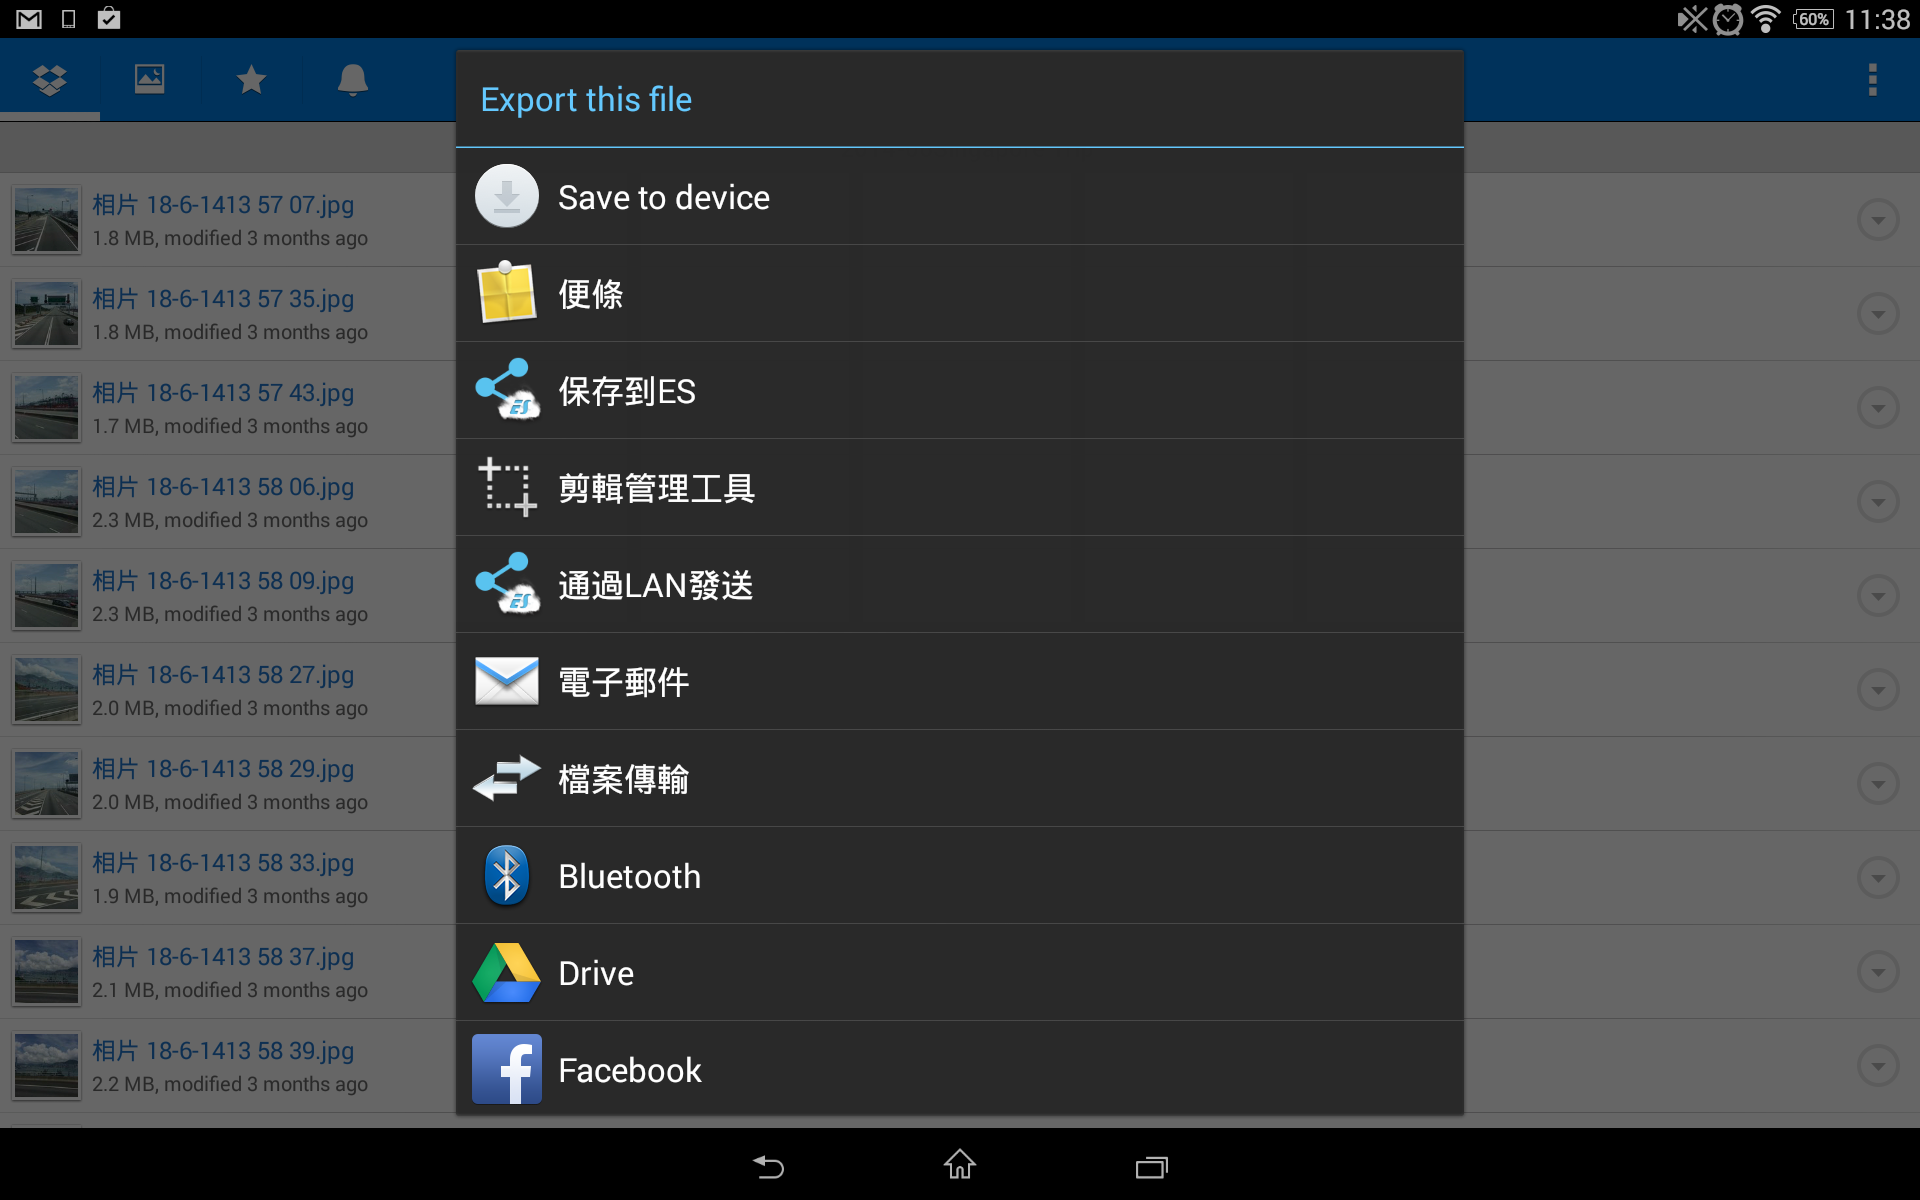 Android 版 Dropbox 更新之後，在 Export 分享位置多了一個 Save to device 按鈕。